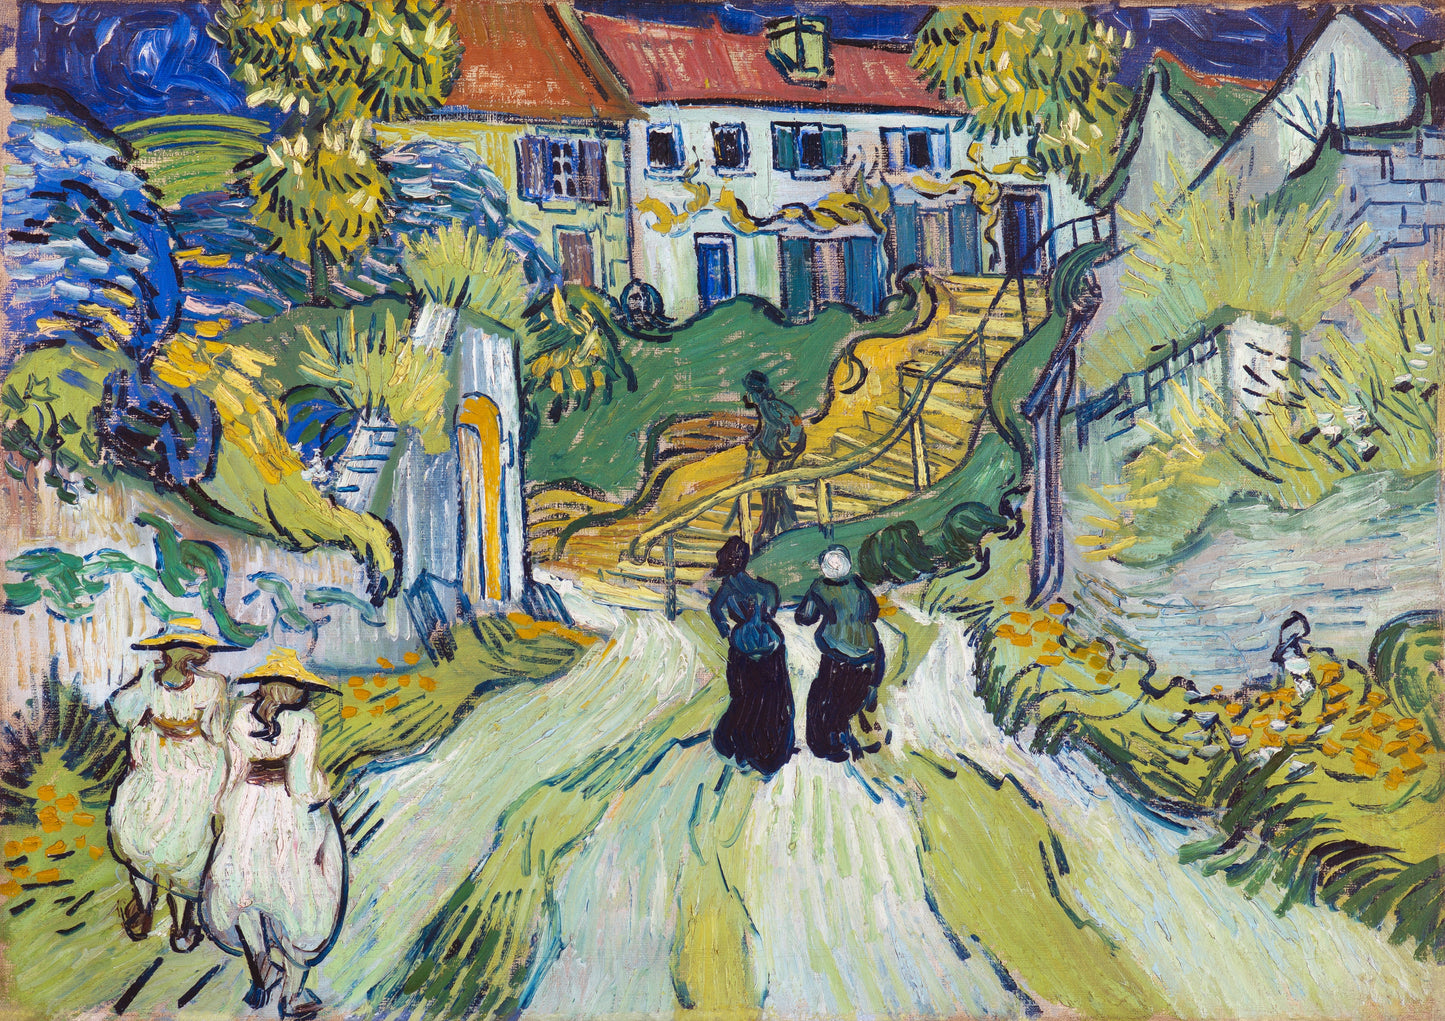 Stairway at Auvers (1890) by Vincent van Gogh